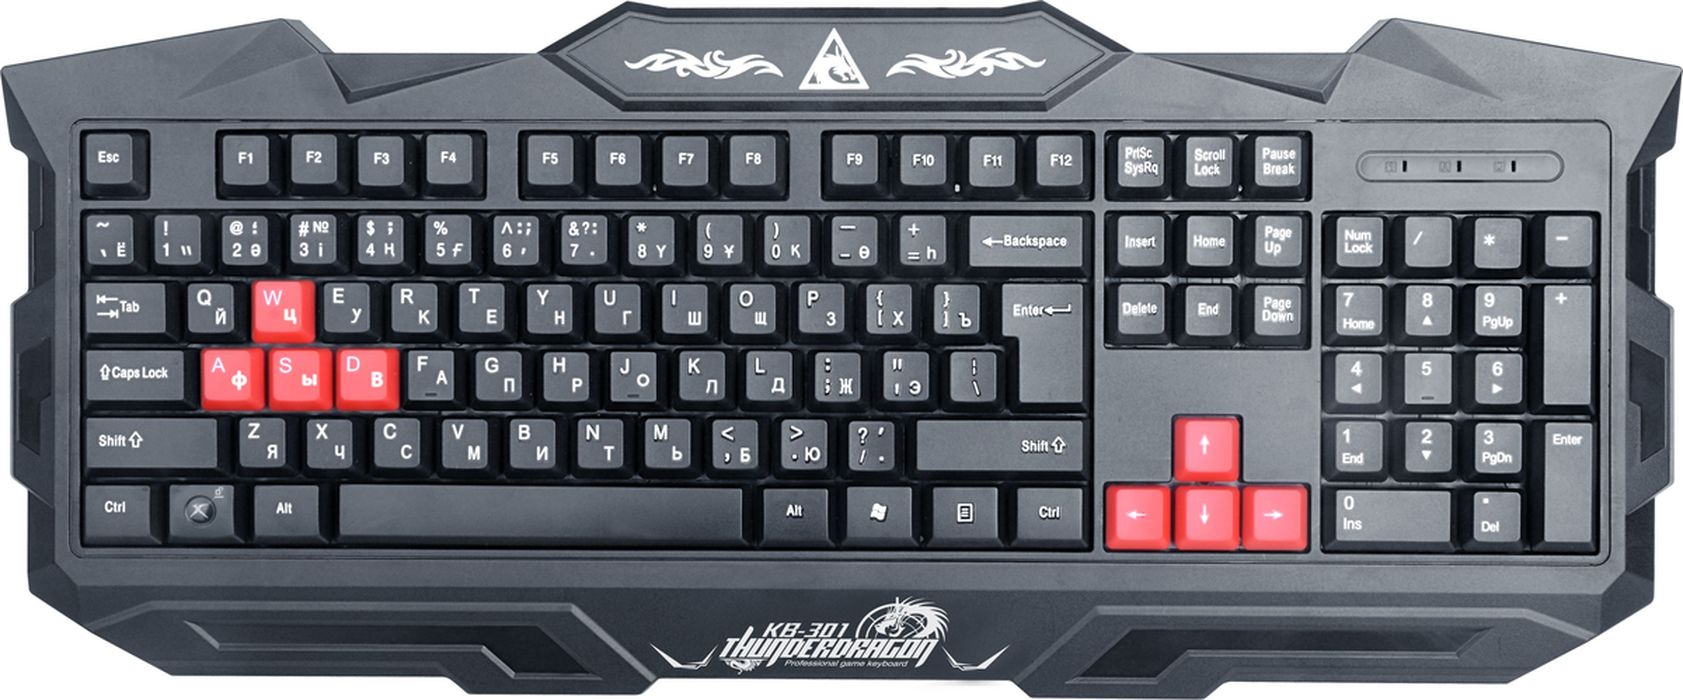 Xtrike Me KB-301, Black игровая клавиатура